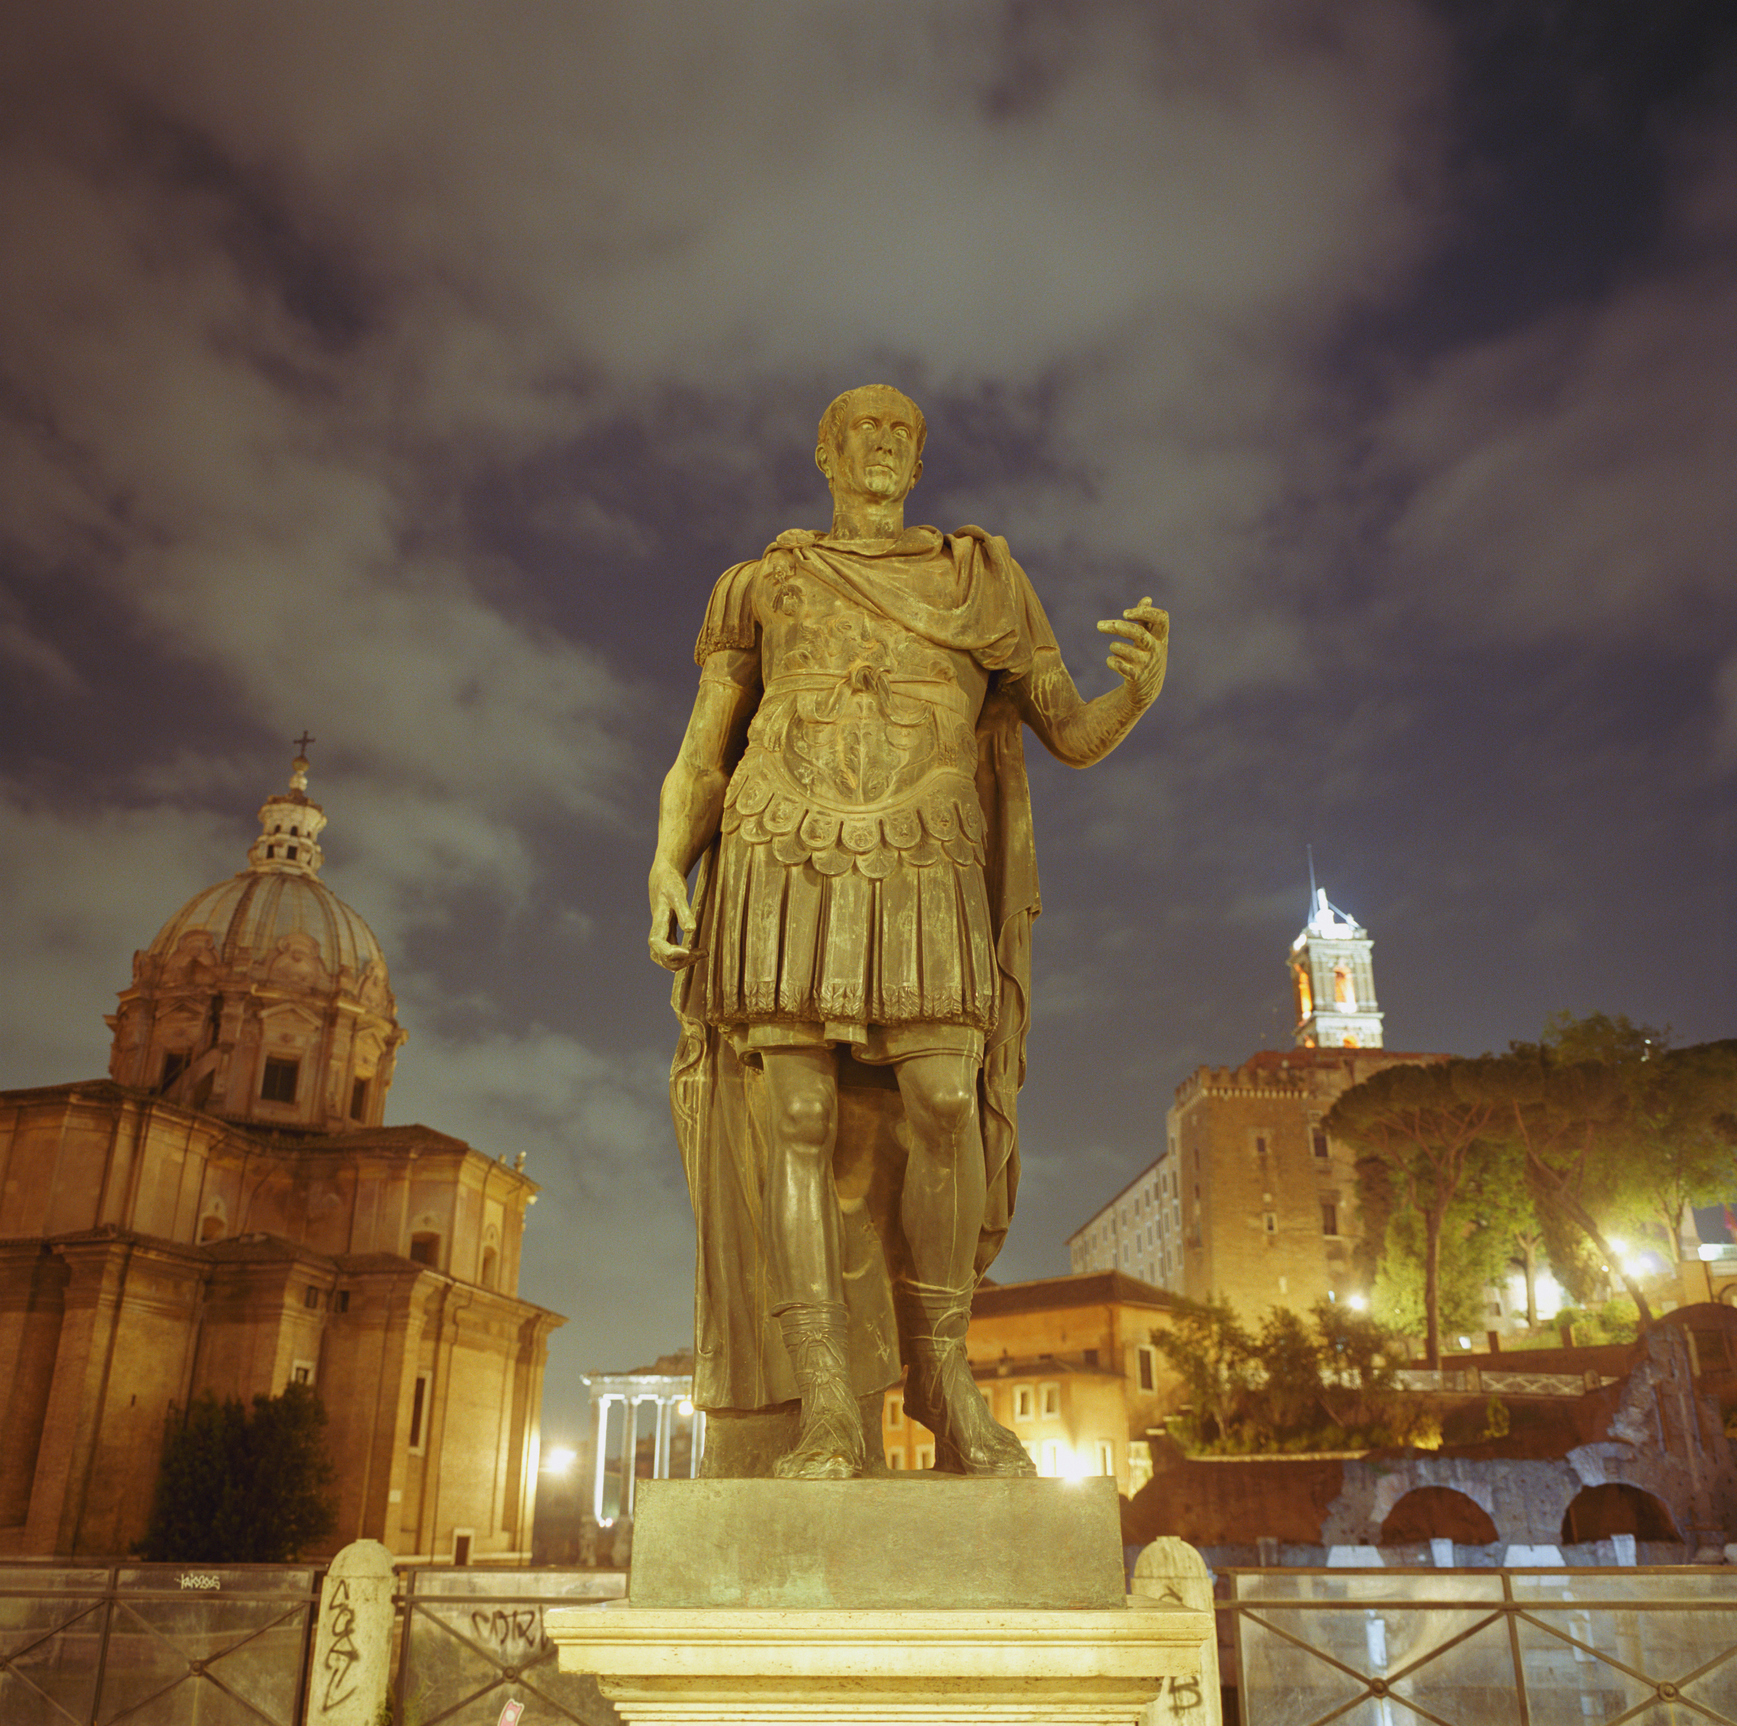 Italy, Rome, statue of Caesar in front of Roman Forum